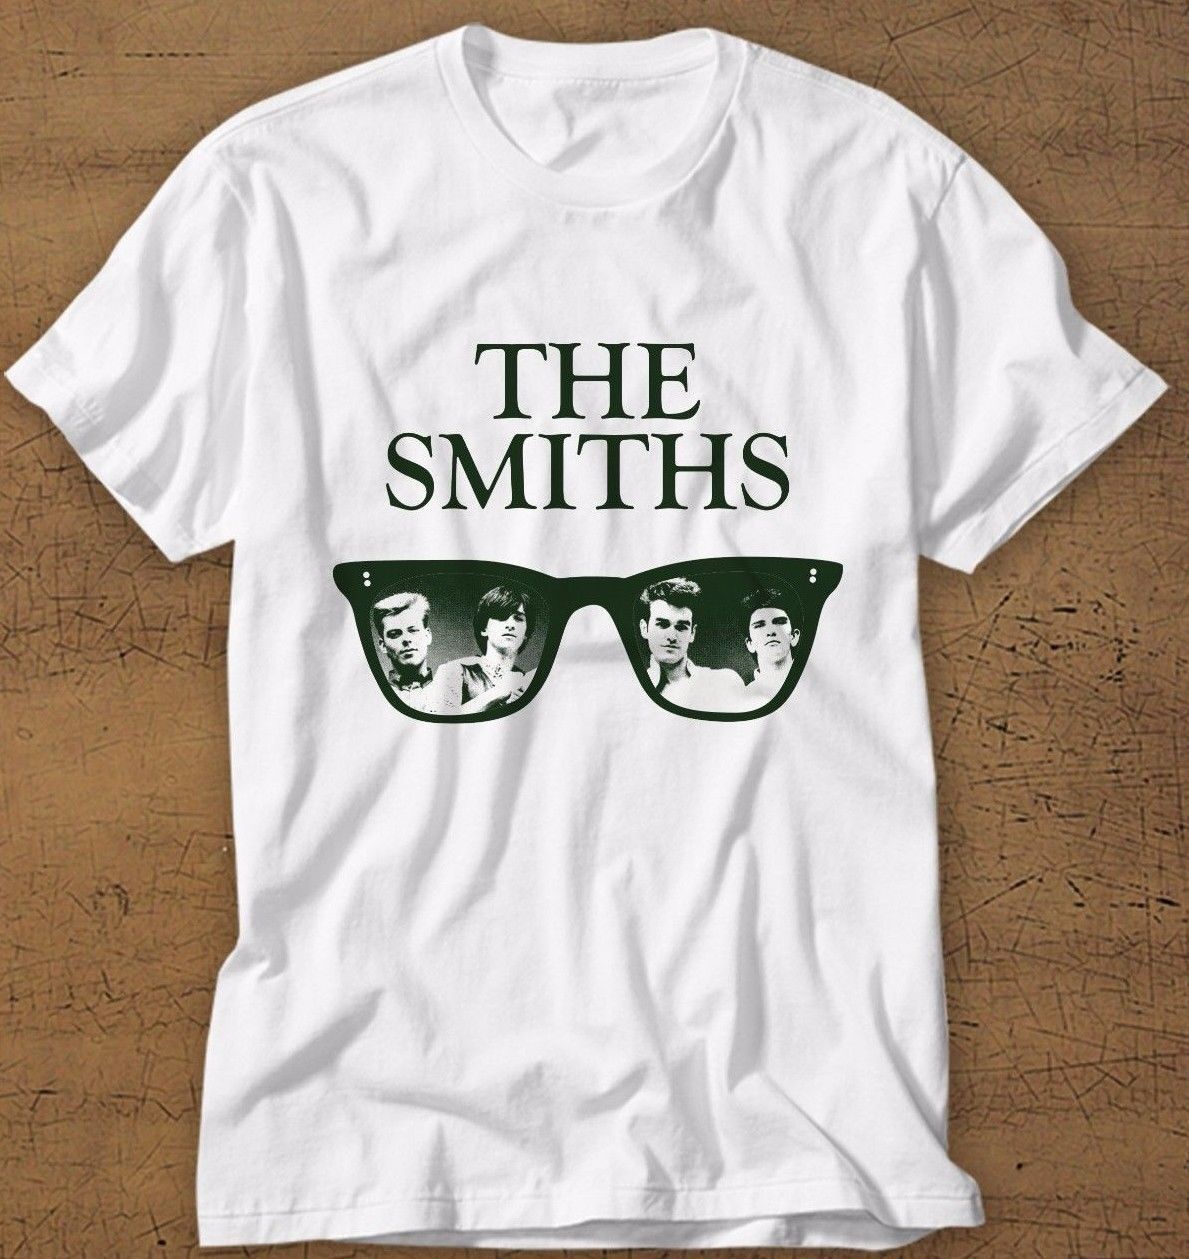 The Smiths, Morrissey, Rock, Alternative, T-Shirt, Vintage, - T-Shirts ...